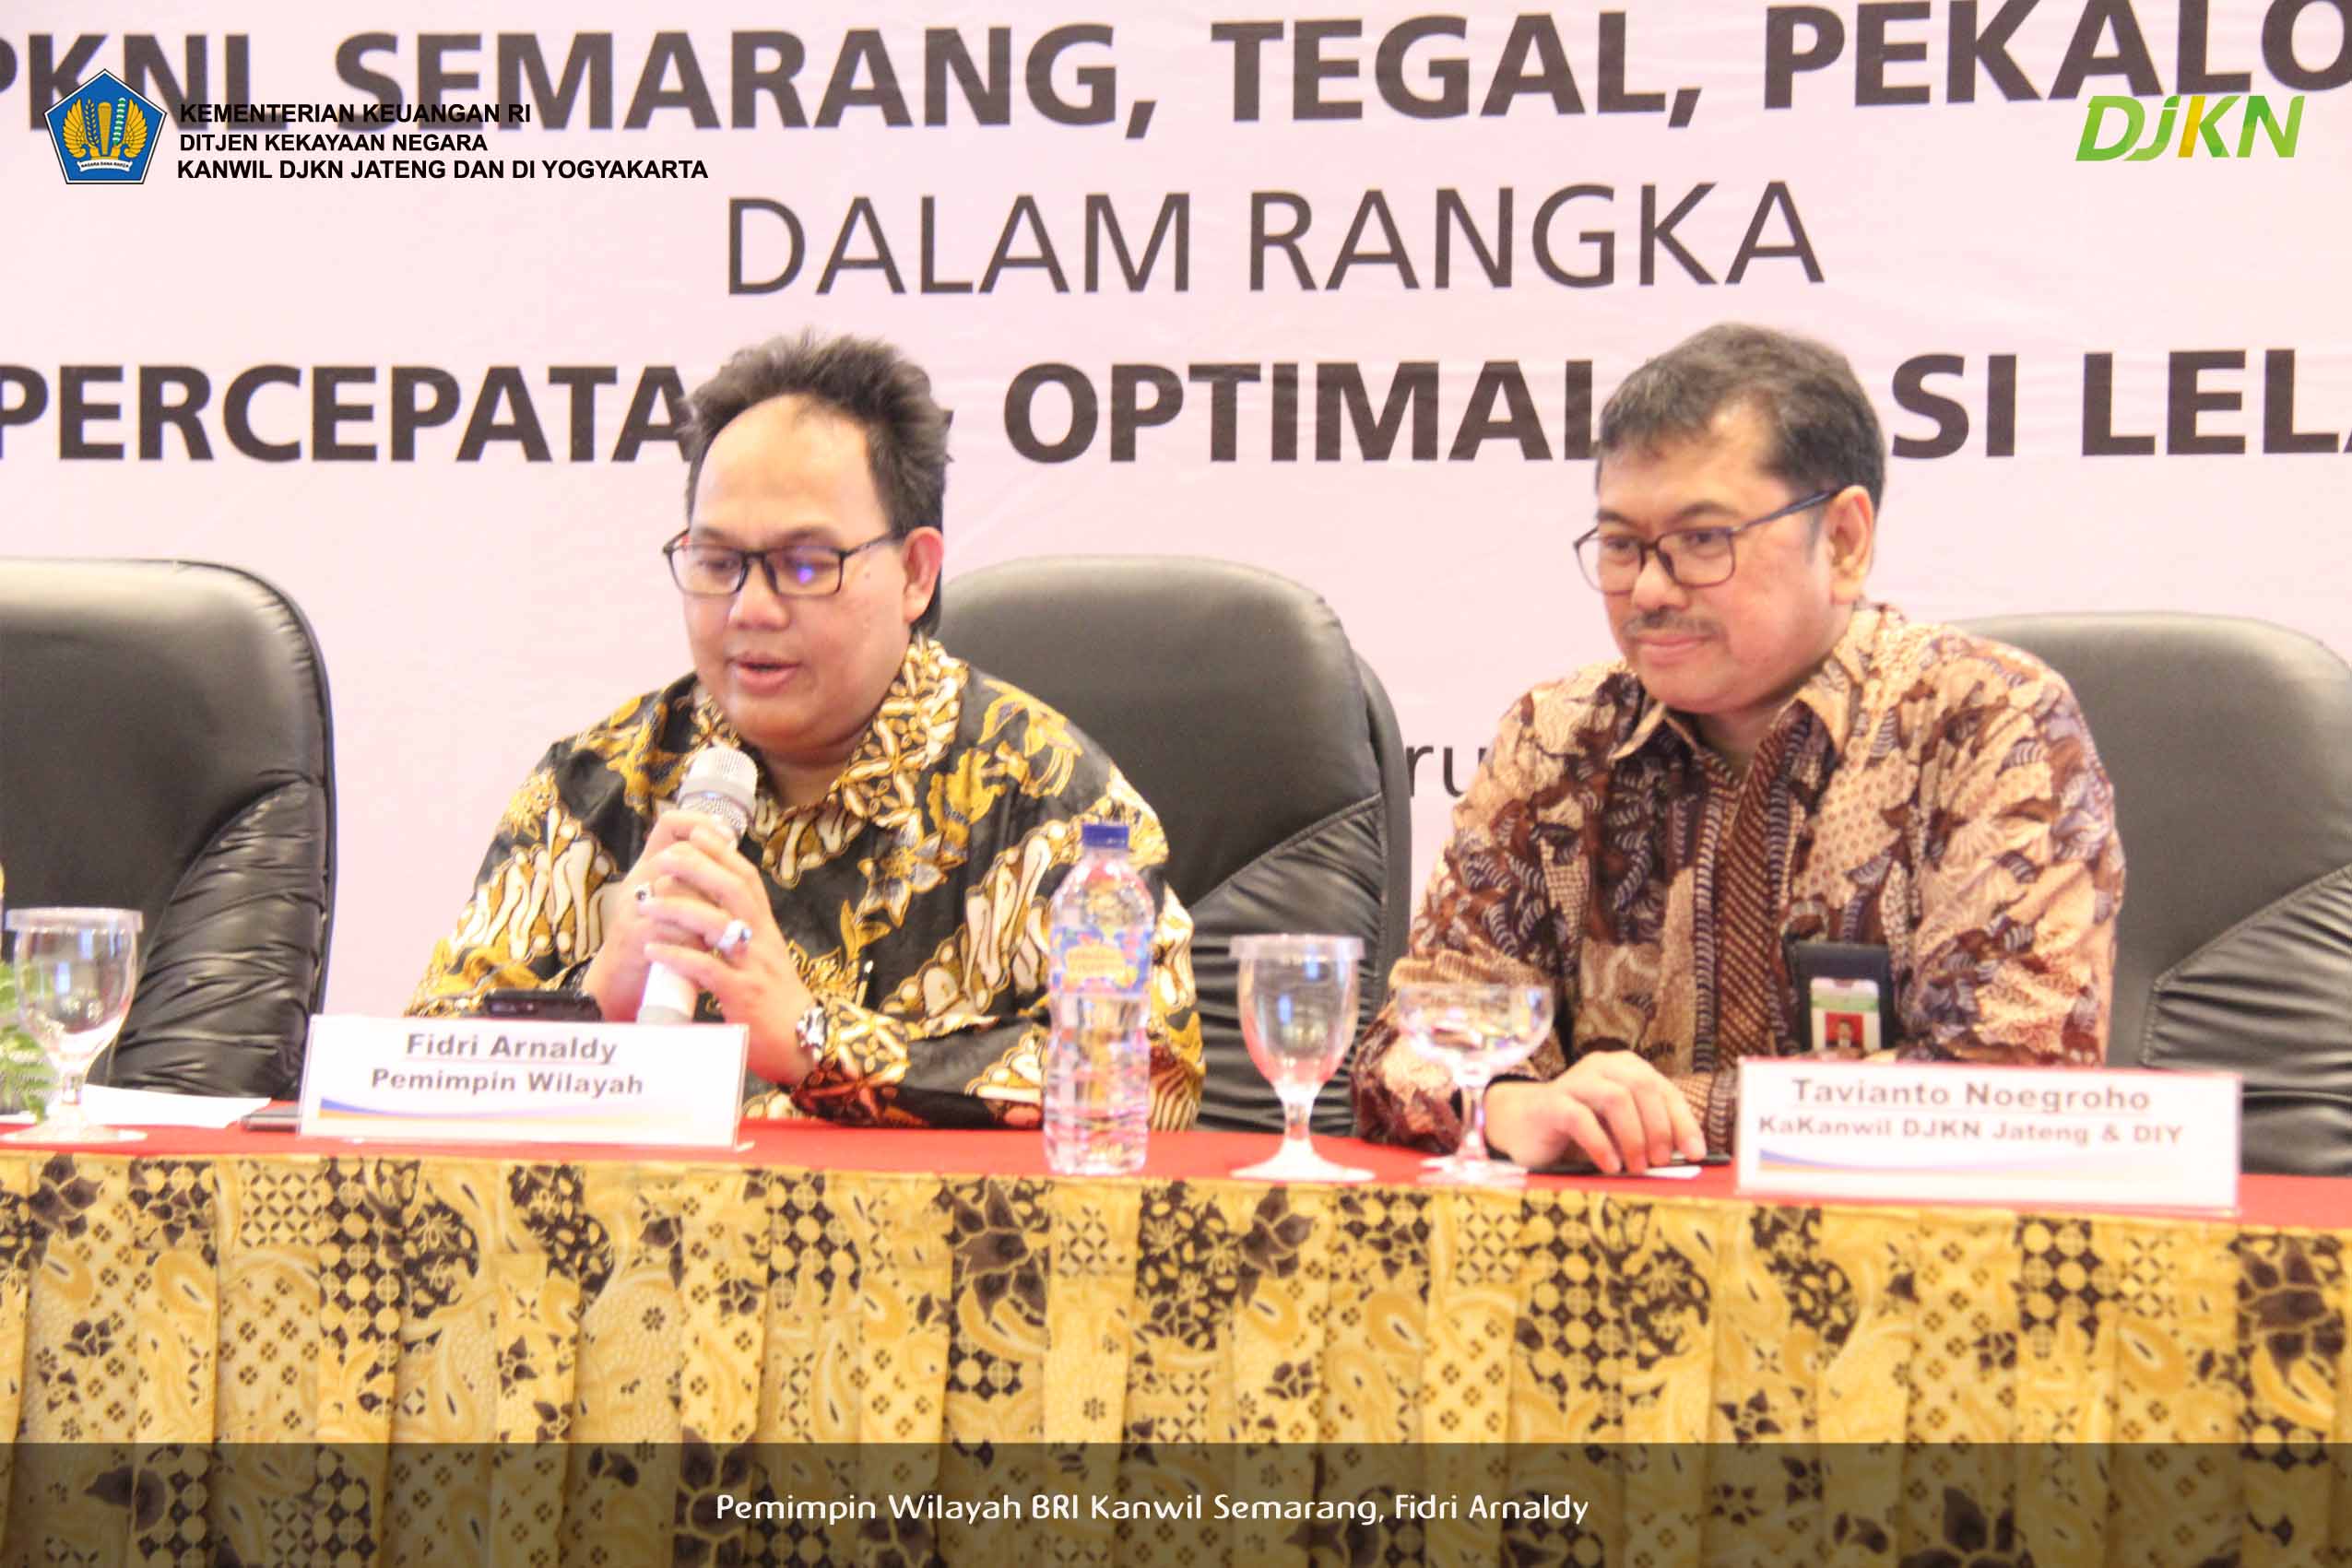 Kanwil DJKN Jateng & DIY dan BRI Kanwil Semarang Koordinasikan Optimalisasi Lelang